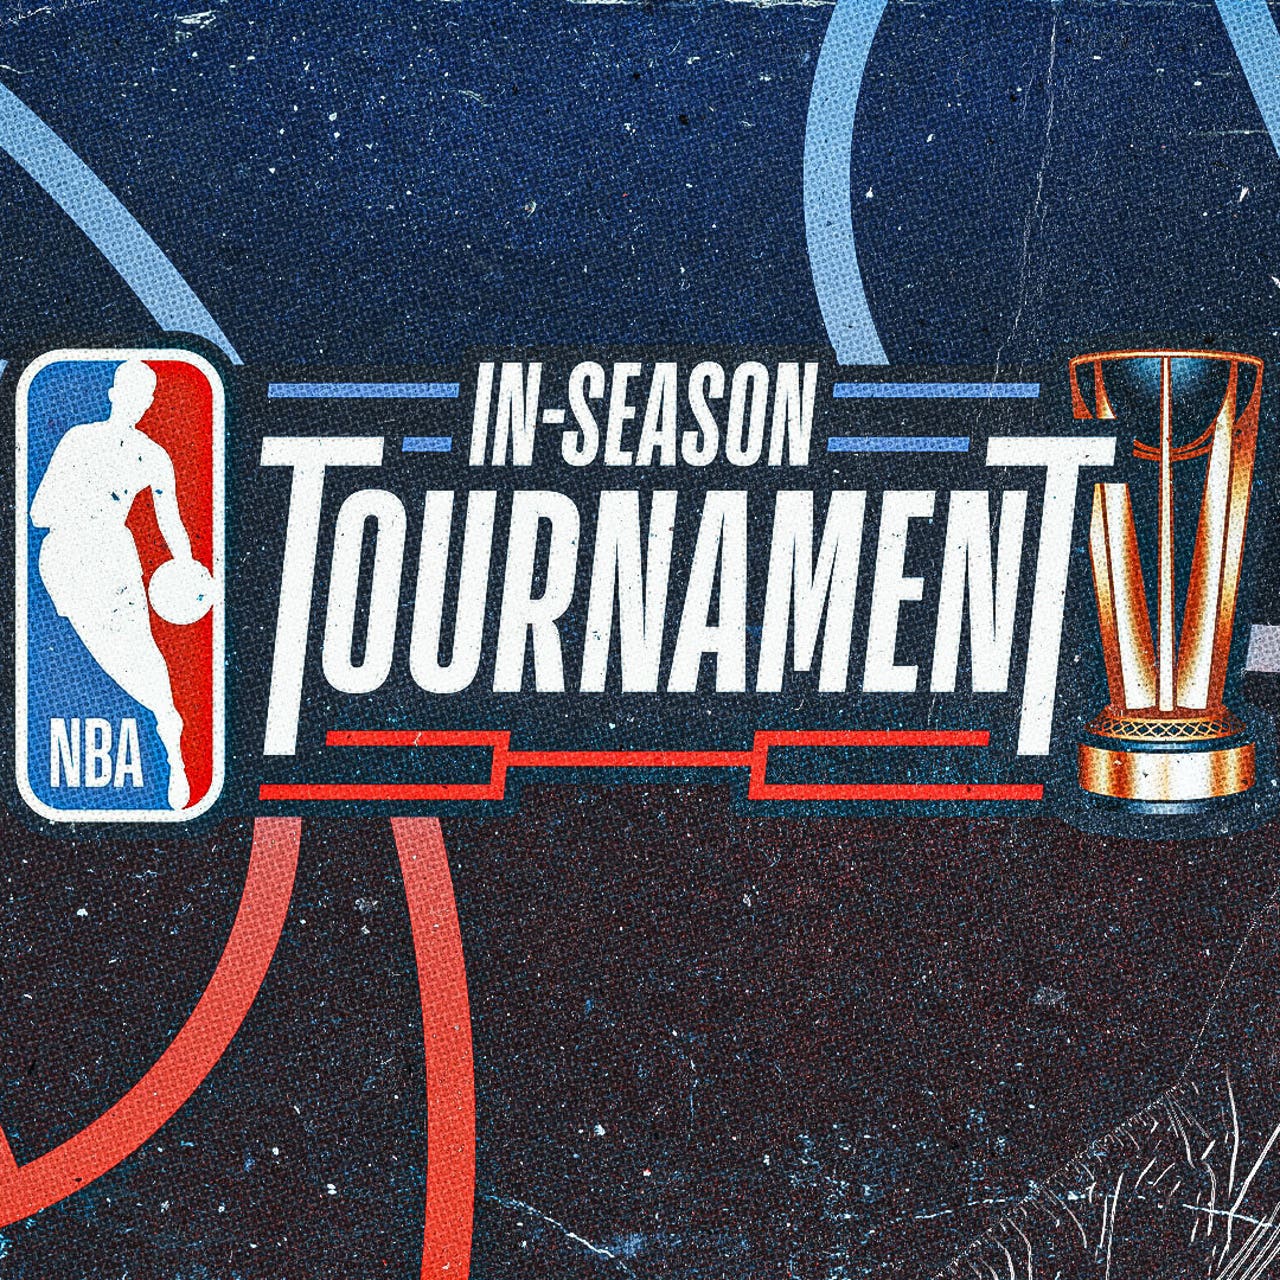 NBA IN-SEASON TOURNAMENT BRACKET AND FORMAT